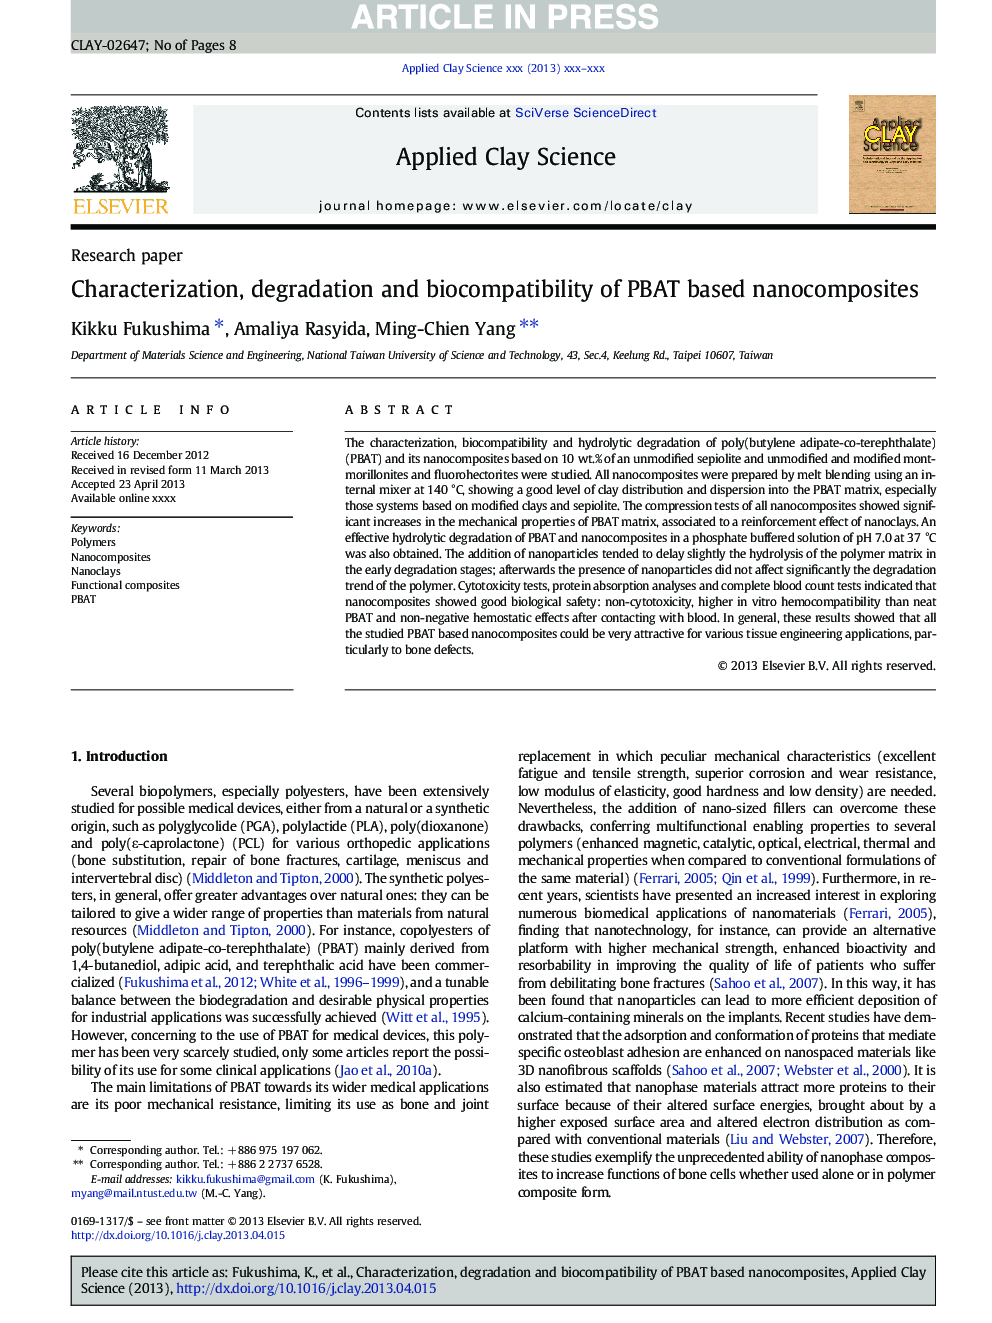 Characterization, degradation and biocompatibility of PBAT based nanocomposites